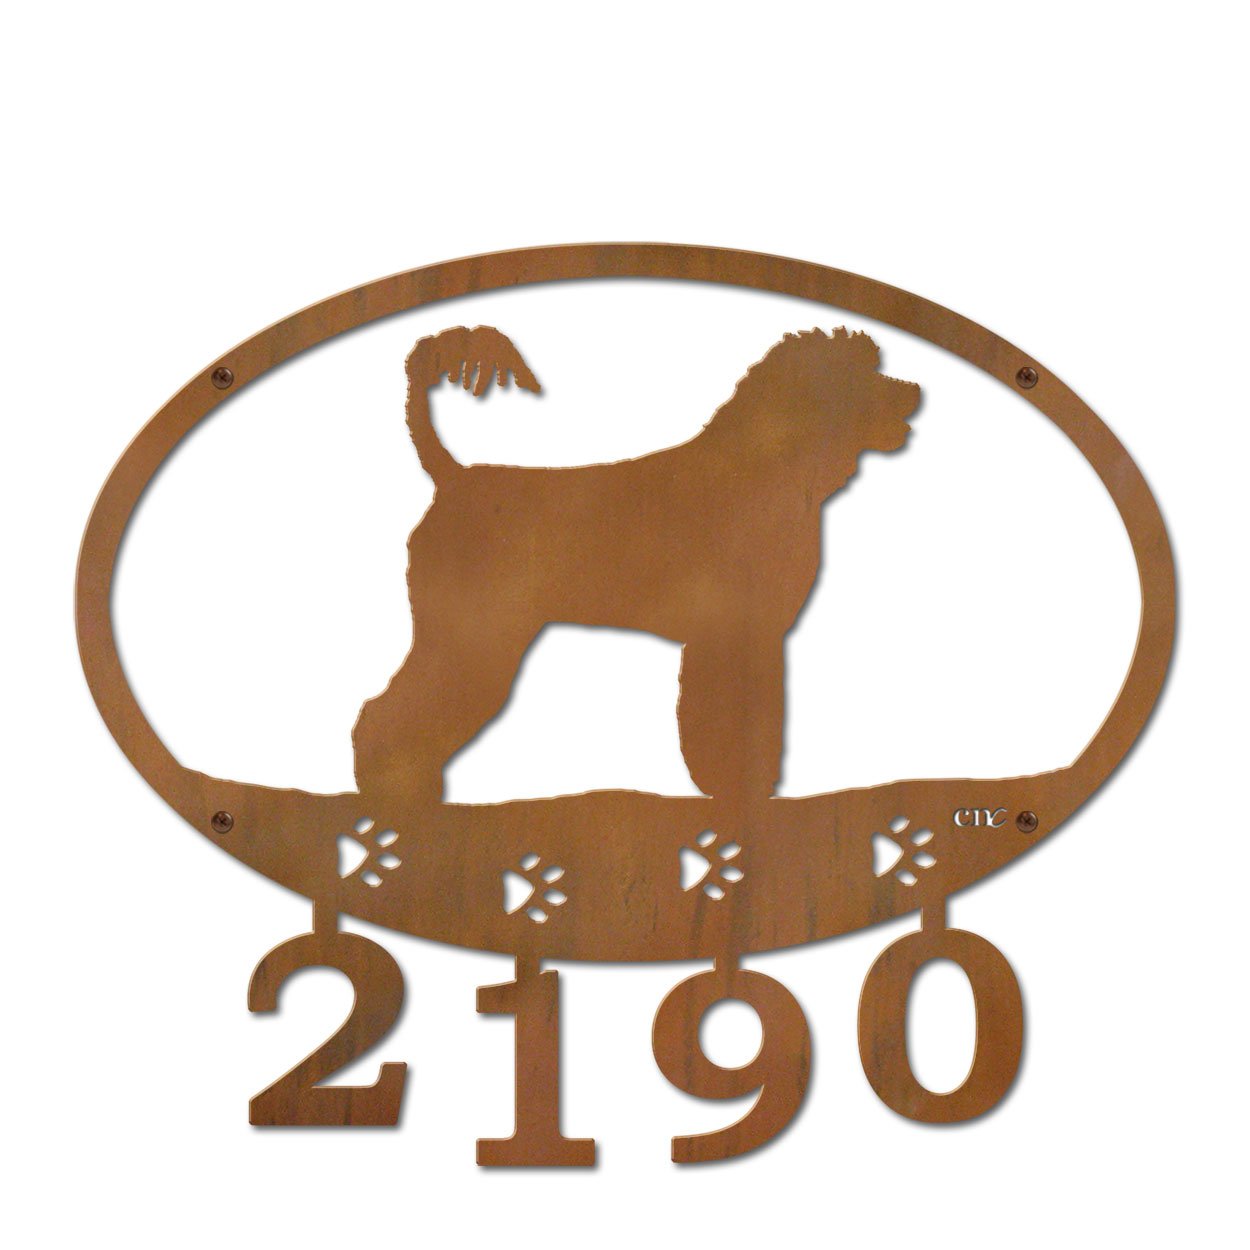 601153 - Portuguese Water Dog Custom House Numbers